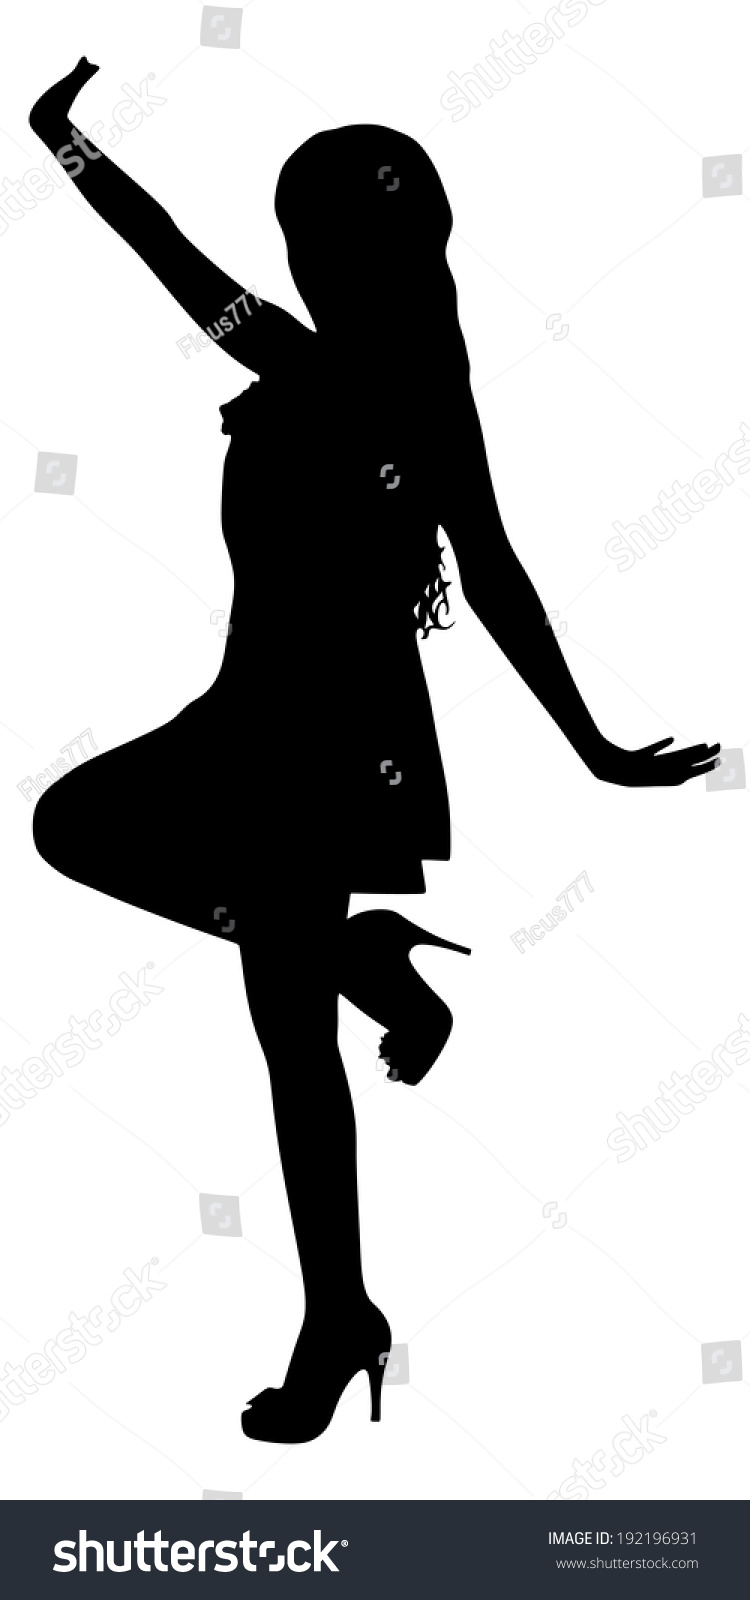 Dancing Silhouette, Vector - 192196931 : Shutterstock